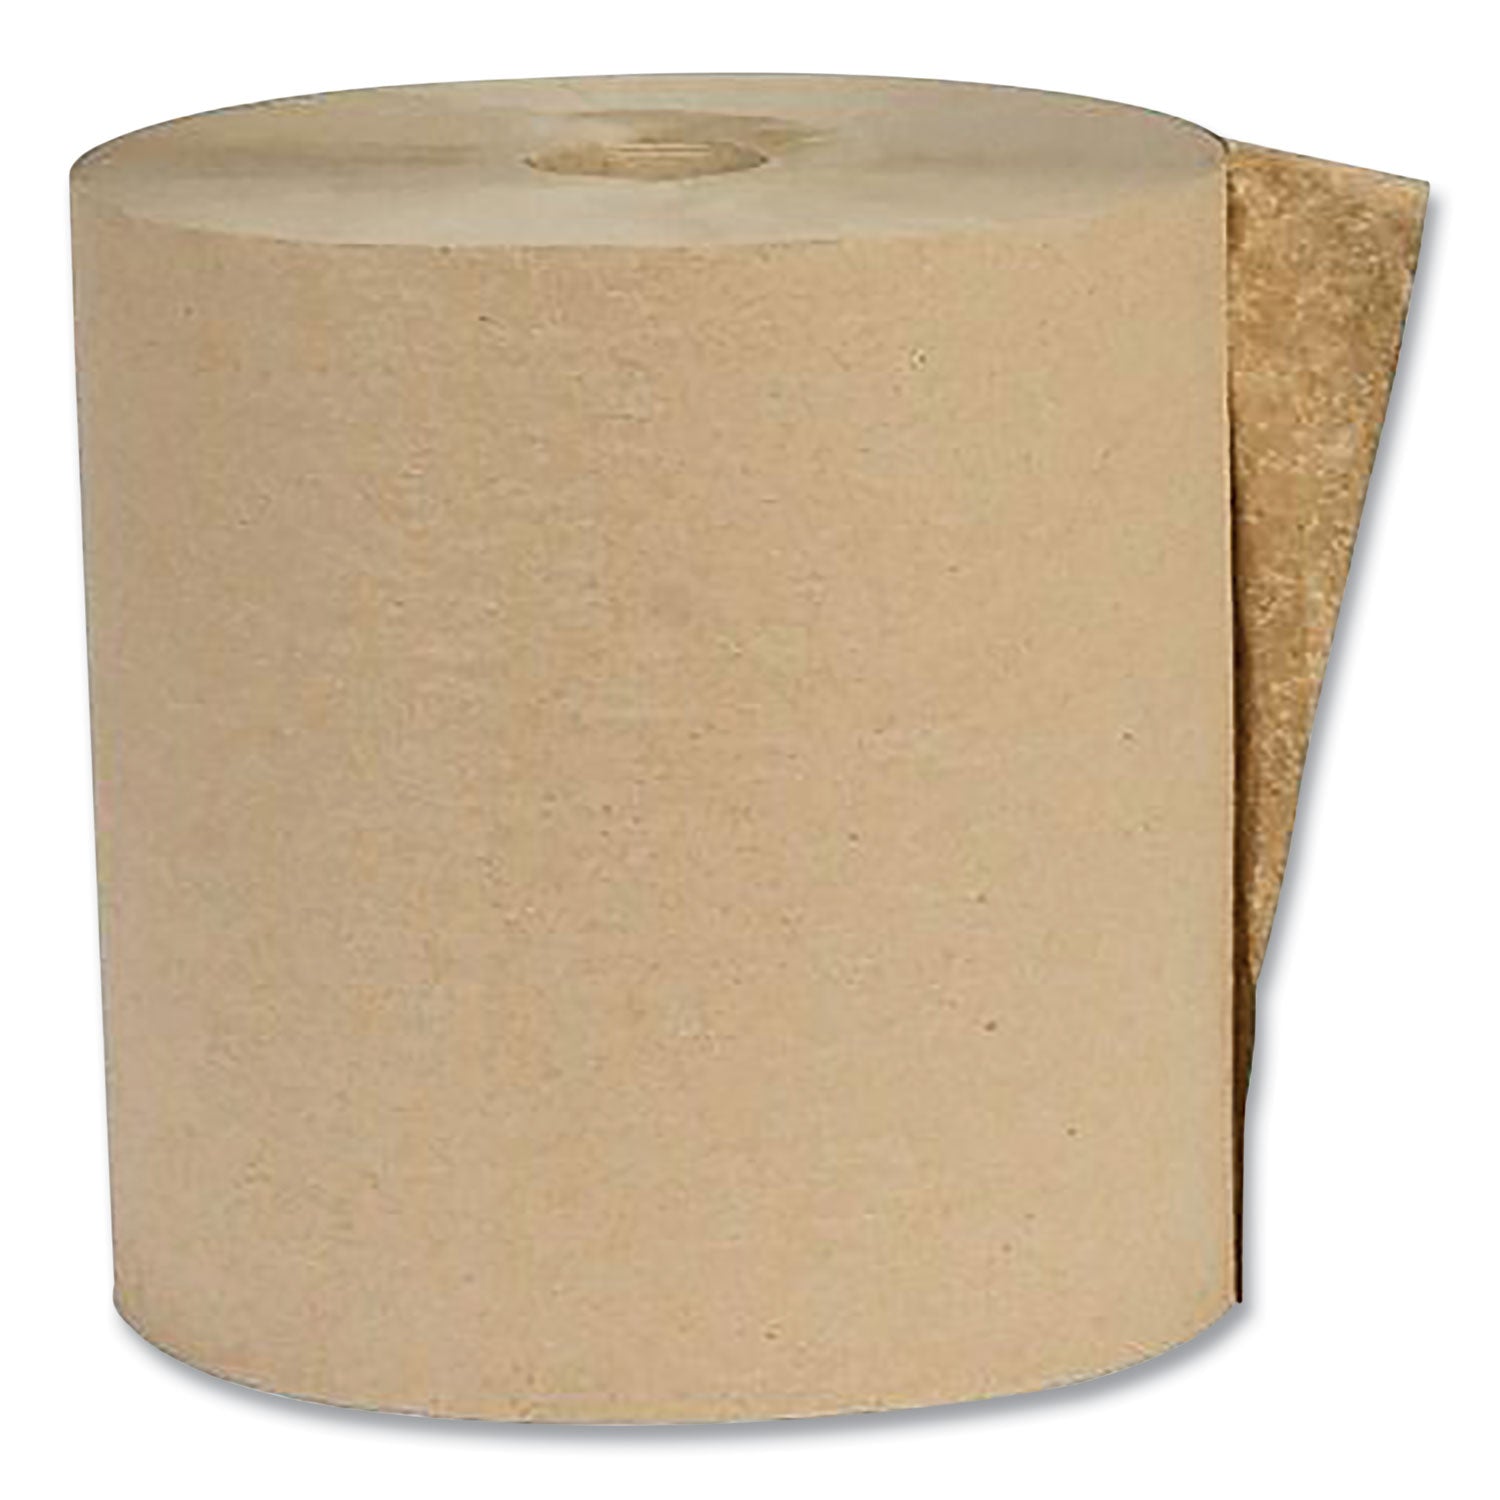 recycled-hardwound-paper-towels-1-ply-788-x-800-ft-16-core-kraft-6-rolls-carton_apaapvek80166 - 1